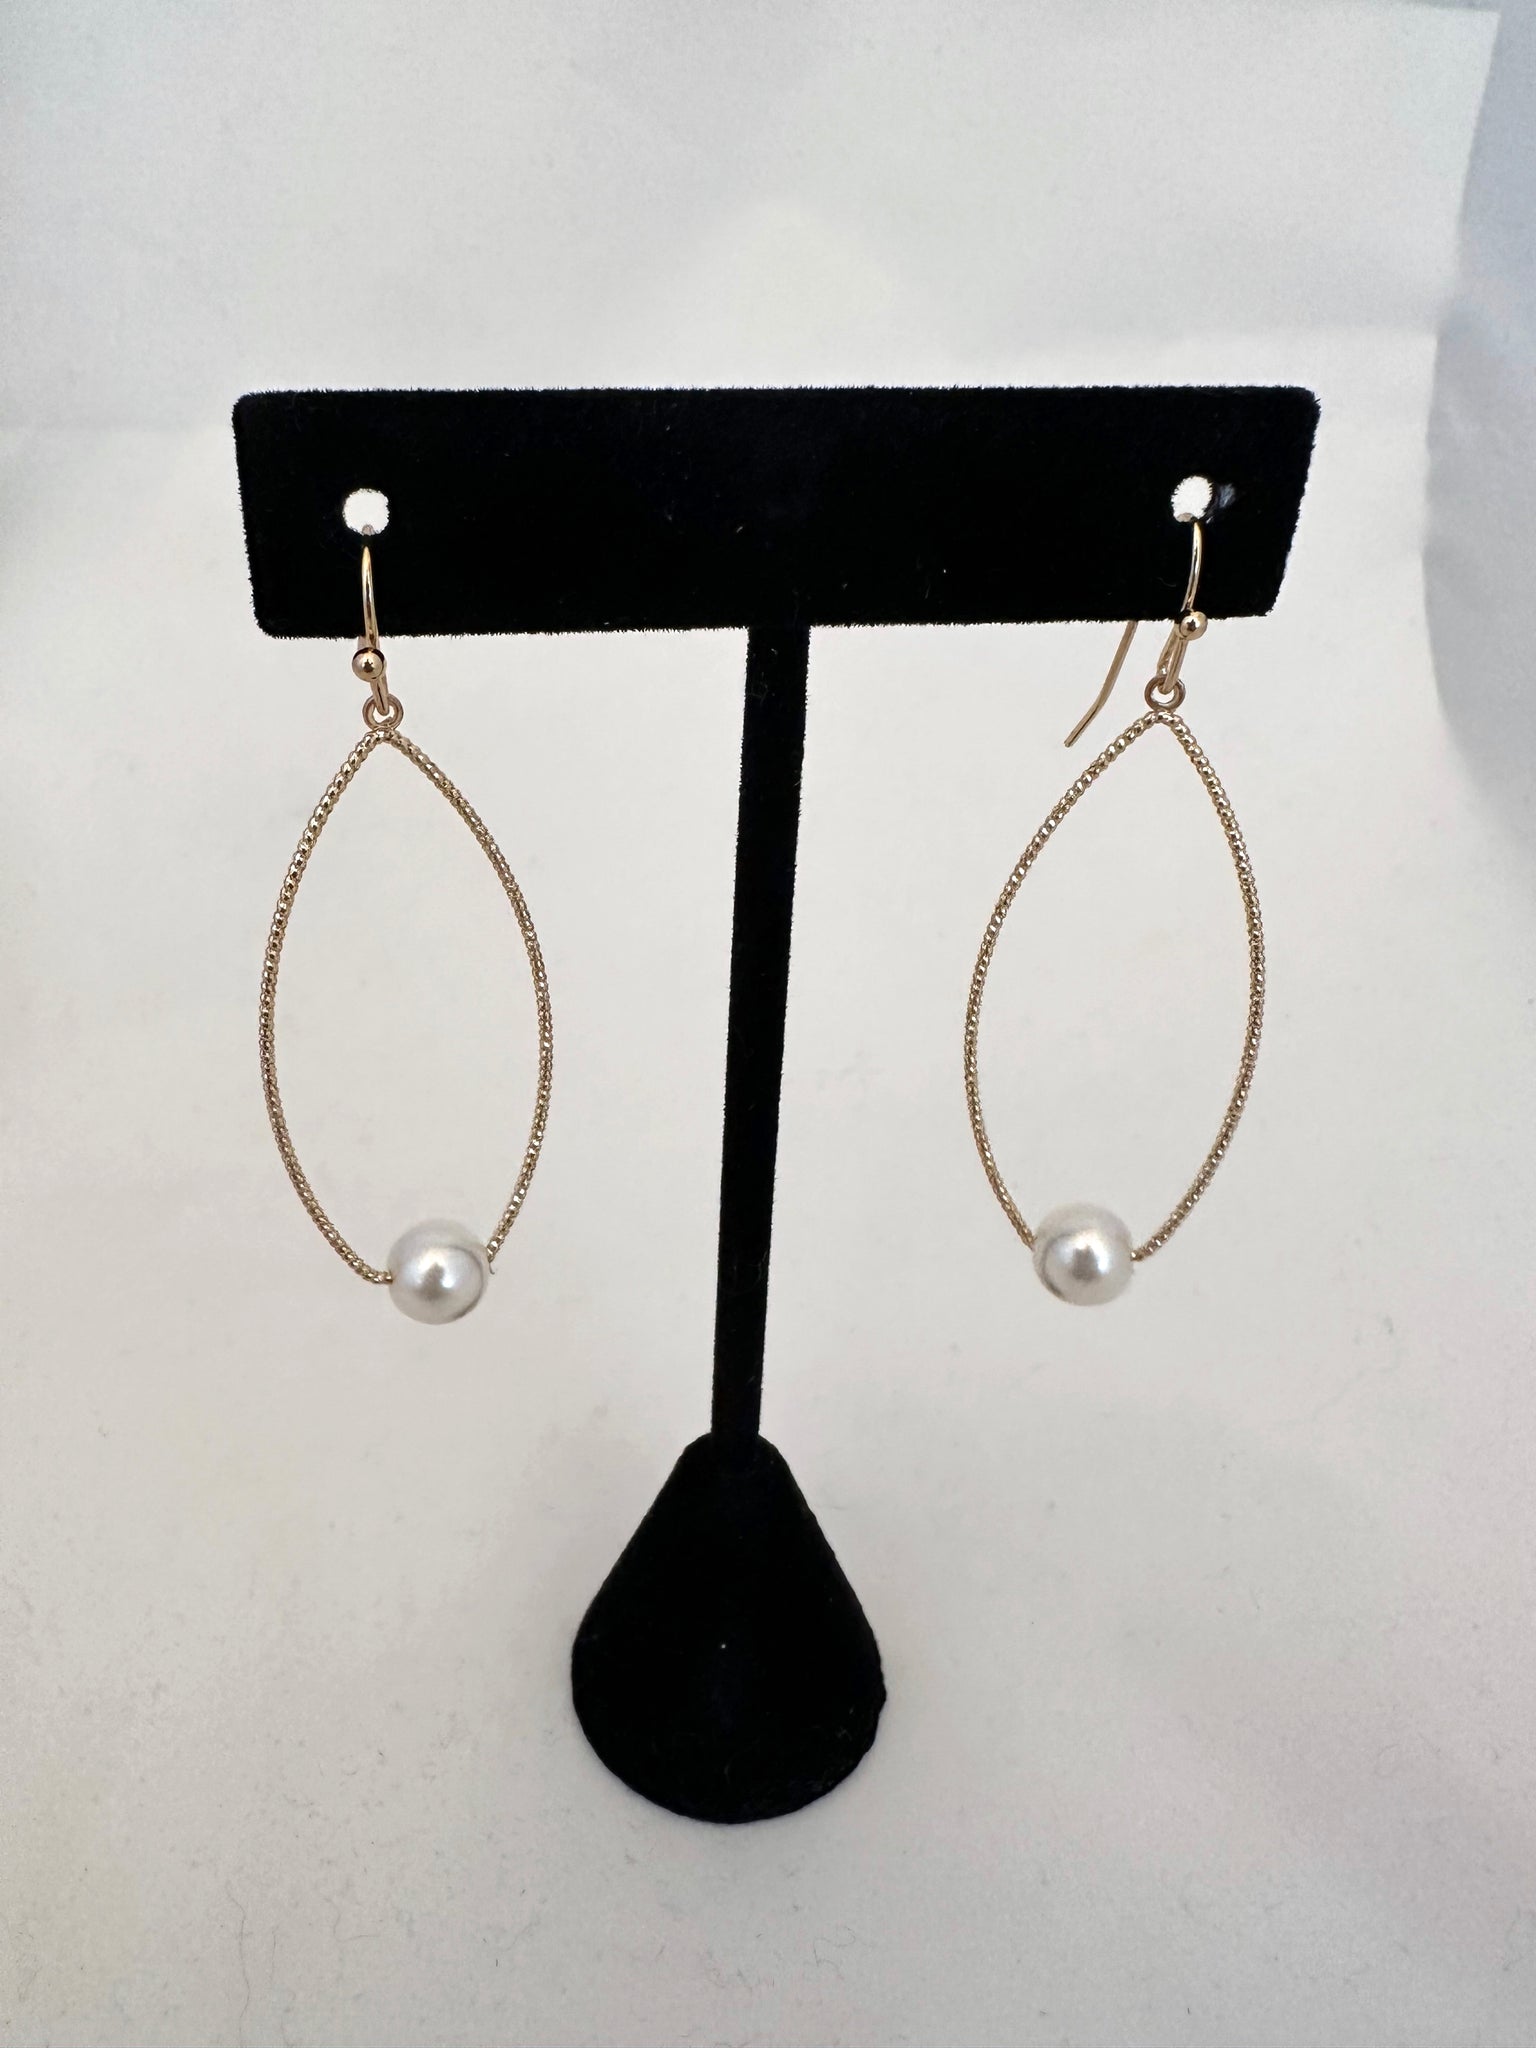 Textured Oval Hoop Earrings with Pearl Detail